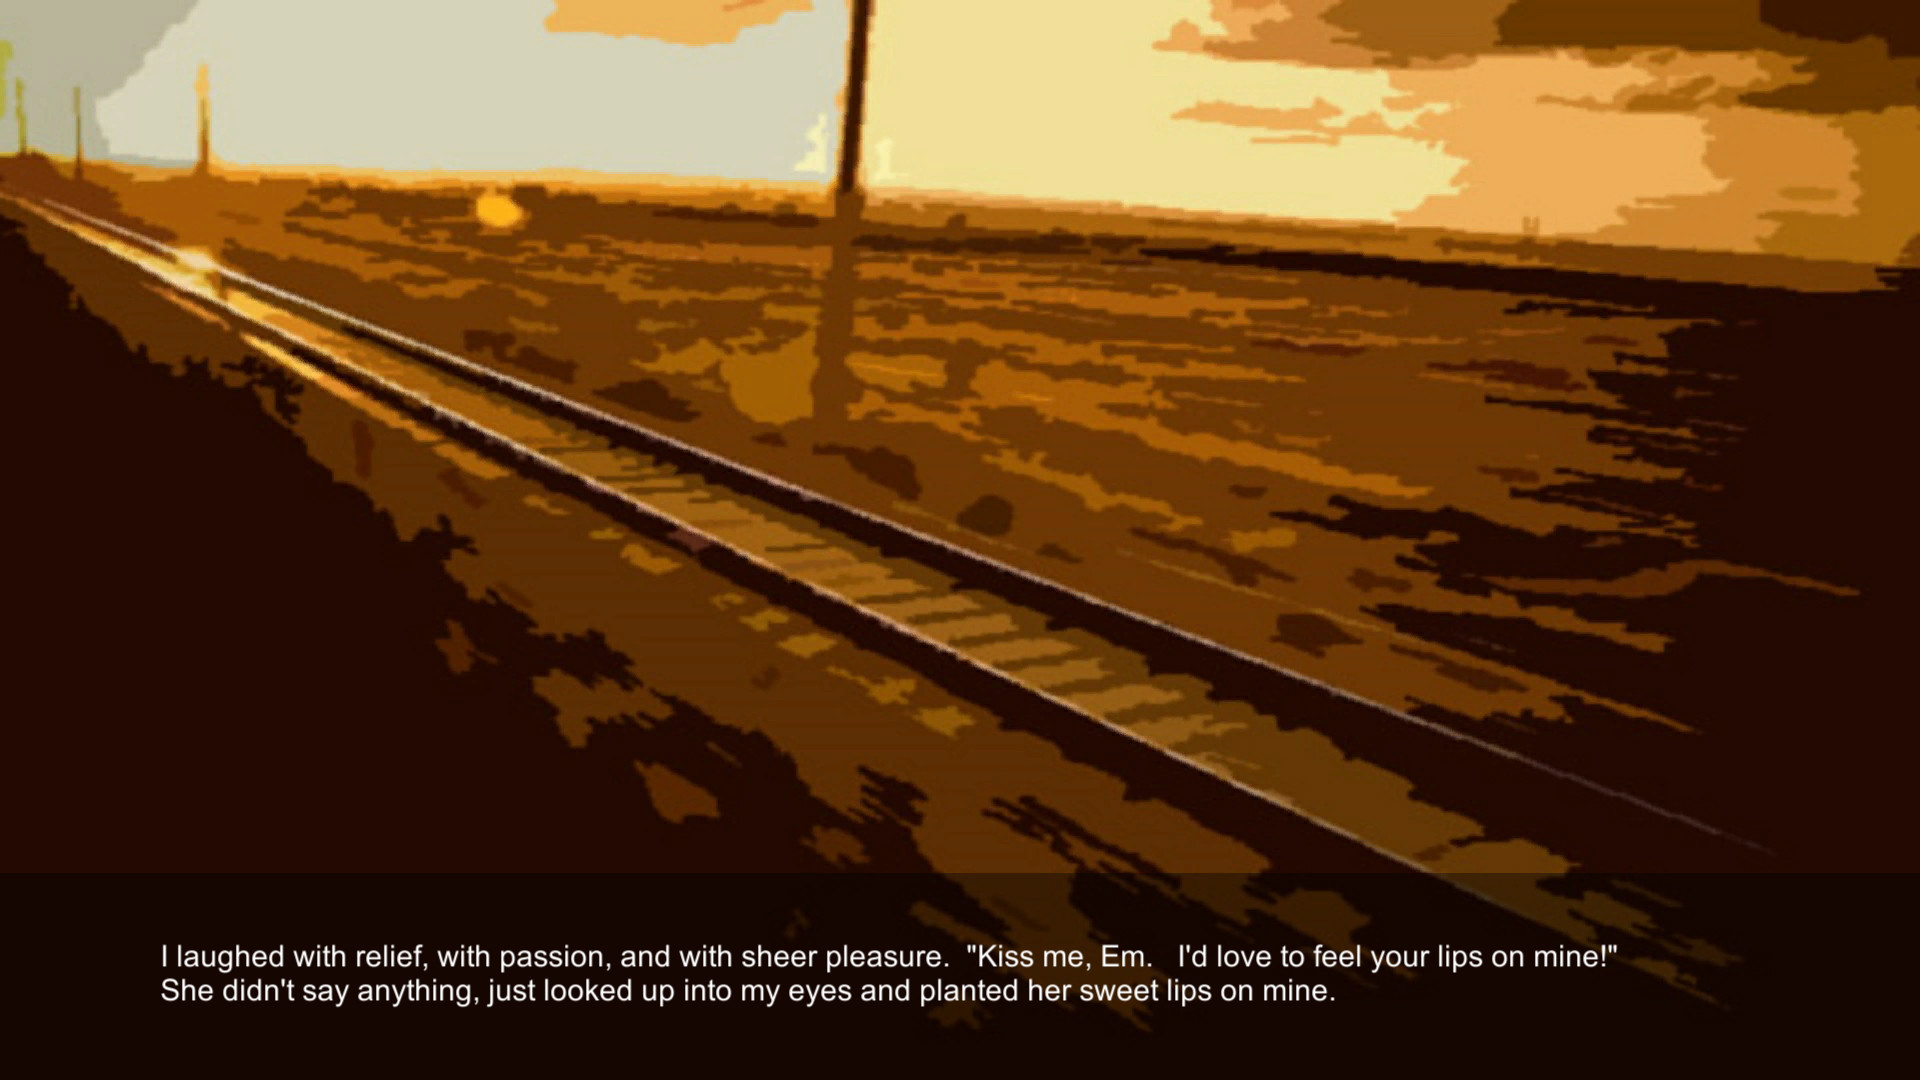 Train Journey screenshot